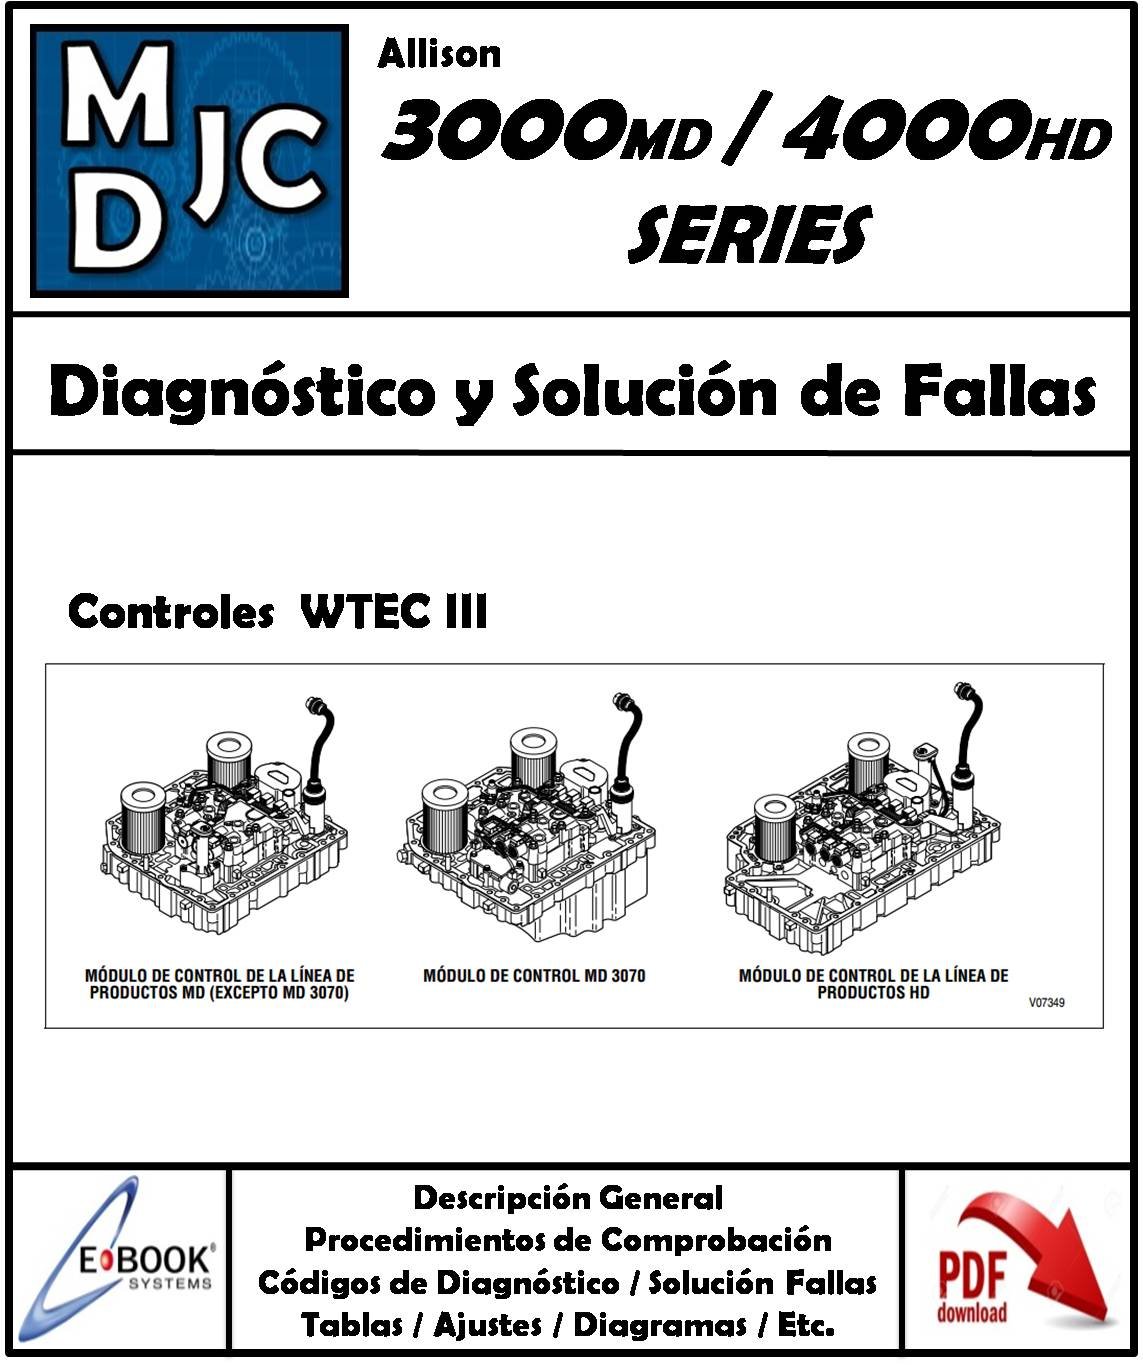 Manual de Taller ( Diagnóstico ) Caja Automática Allison 3000MD // 4000HD